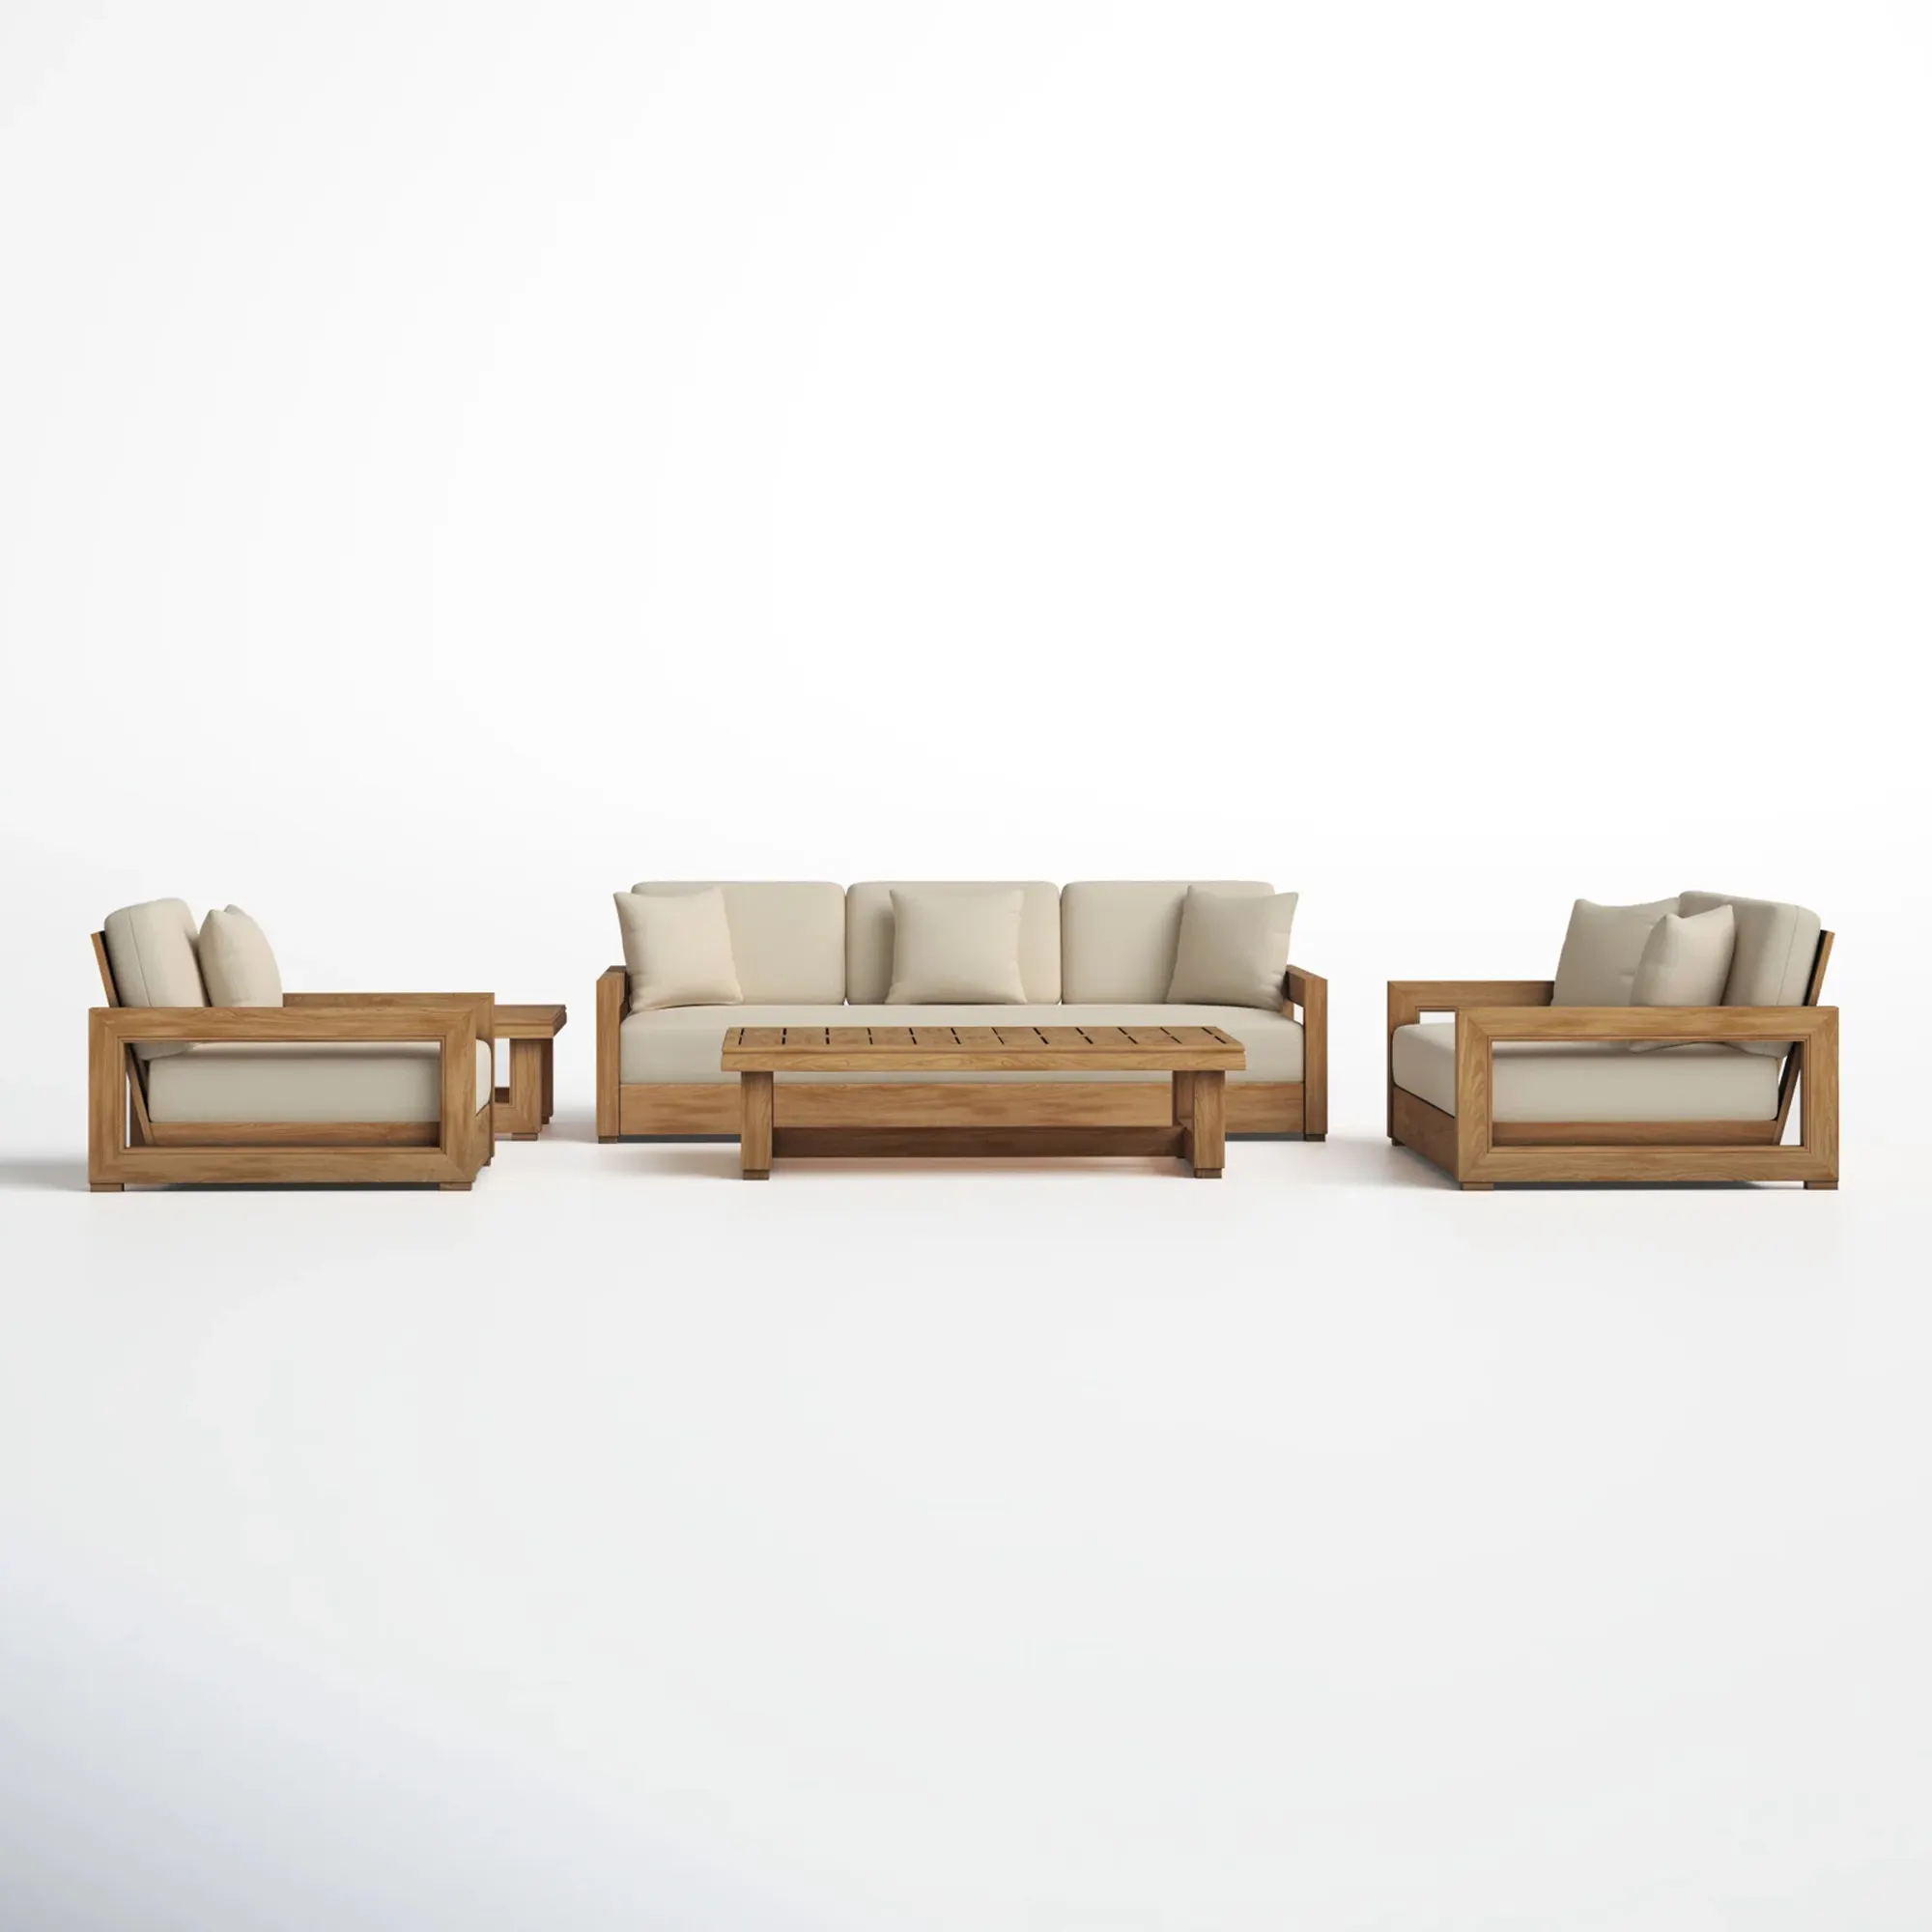 Set Sofa Modern luar ruangan jati alami desain bantal cantik-Xylo